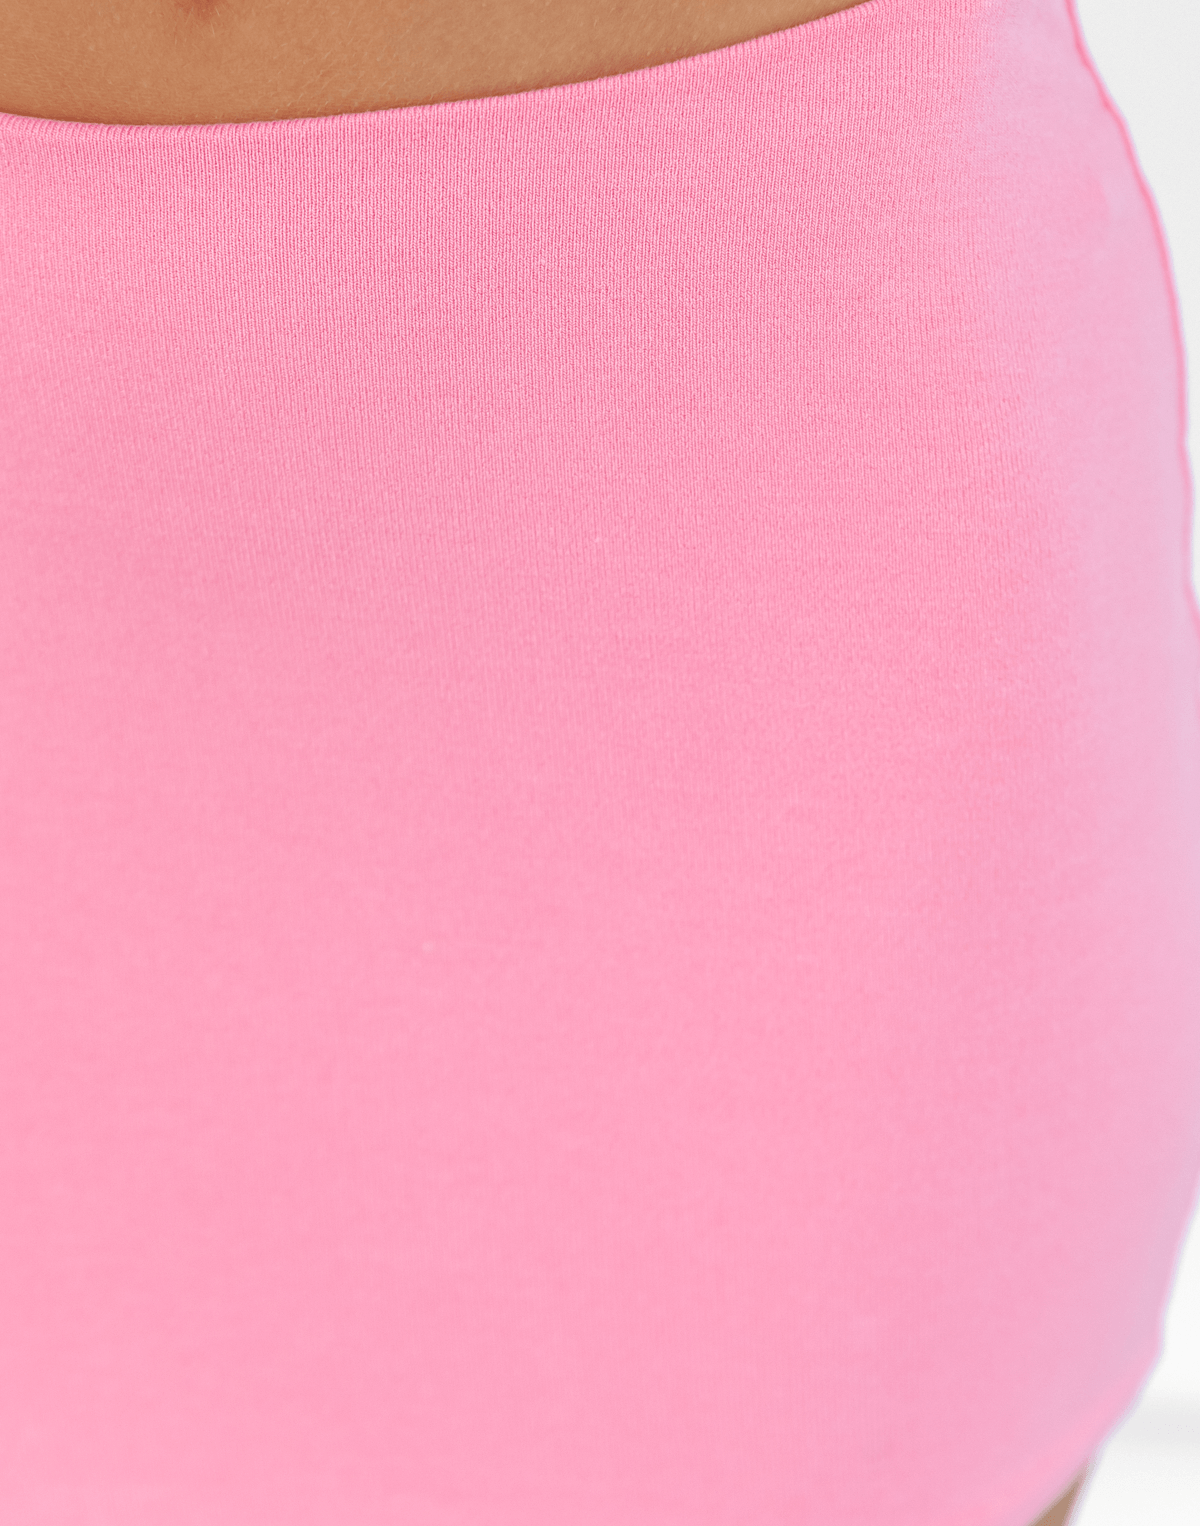 Press Pause Mini Skirt (Pink) - Mid Waisted Mini Skirt - Women's Skirt - Charcoal Clothing